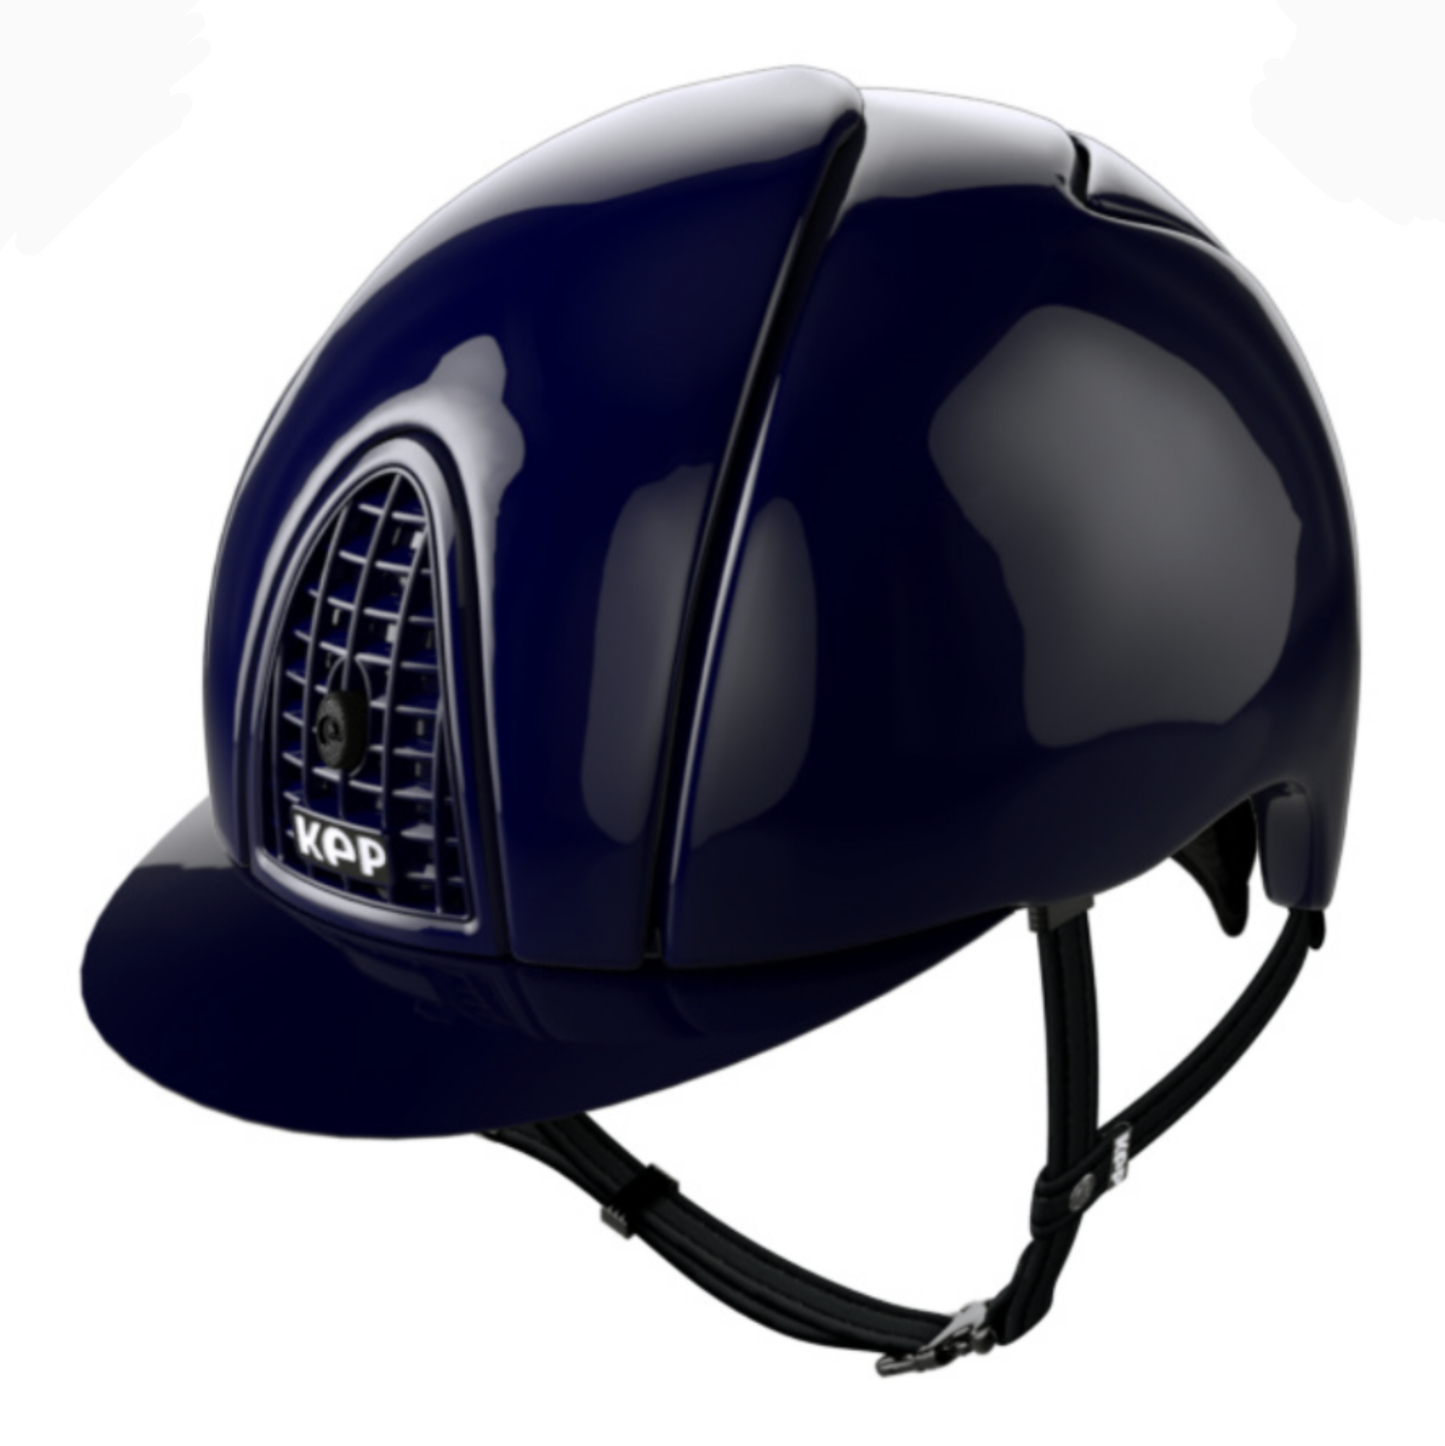 KEP brand equestrian helmet, modern style, deep blue, safety gear.